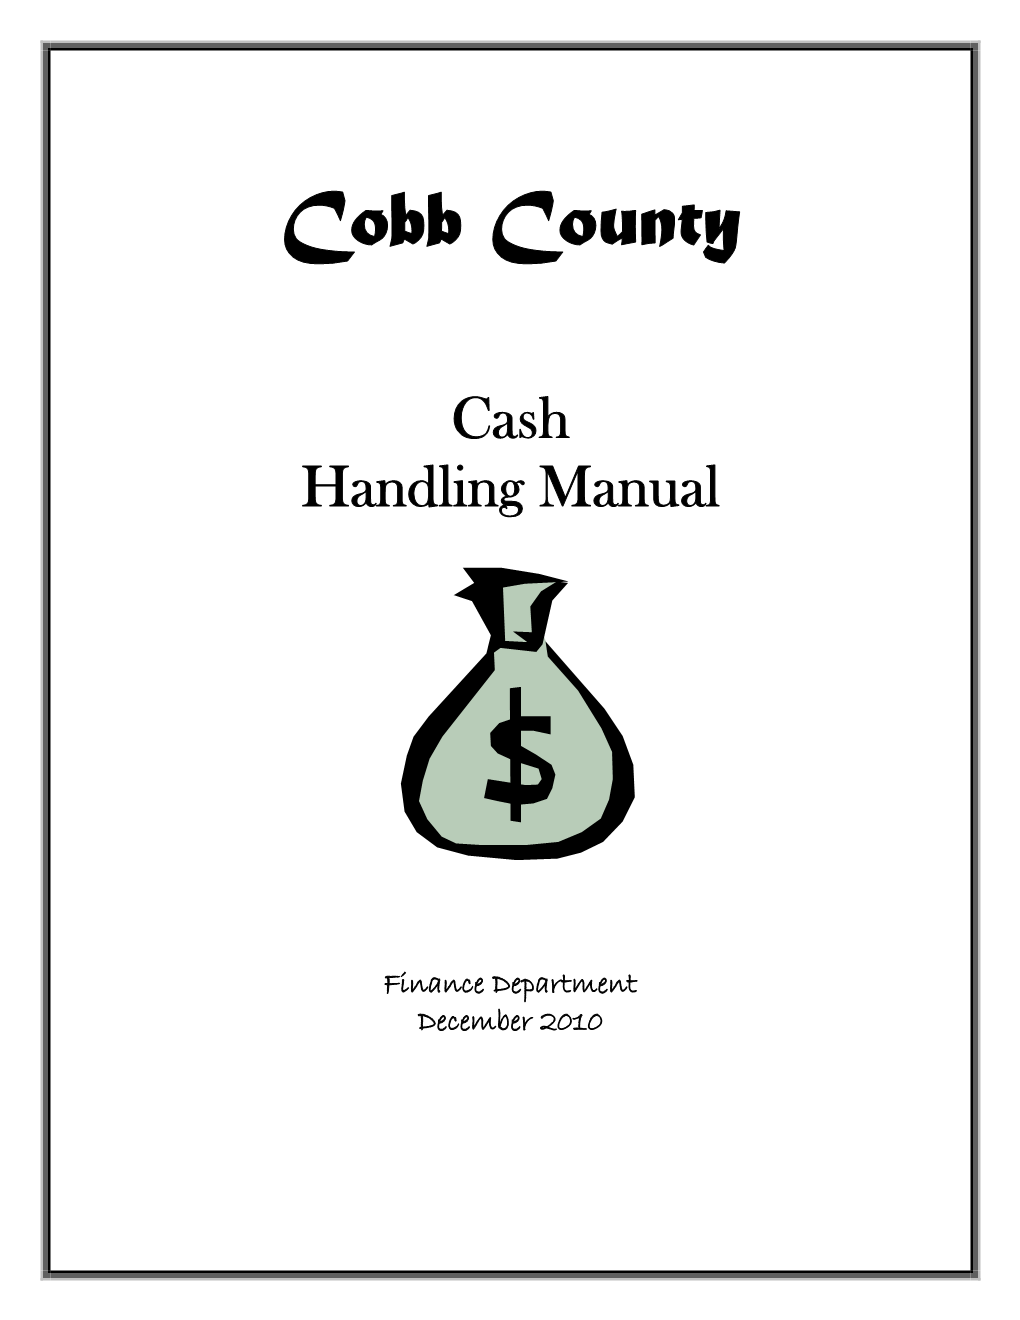 Cash Handling Manual